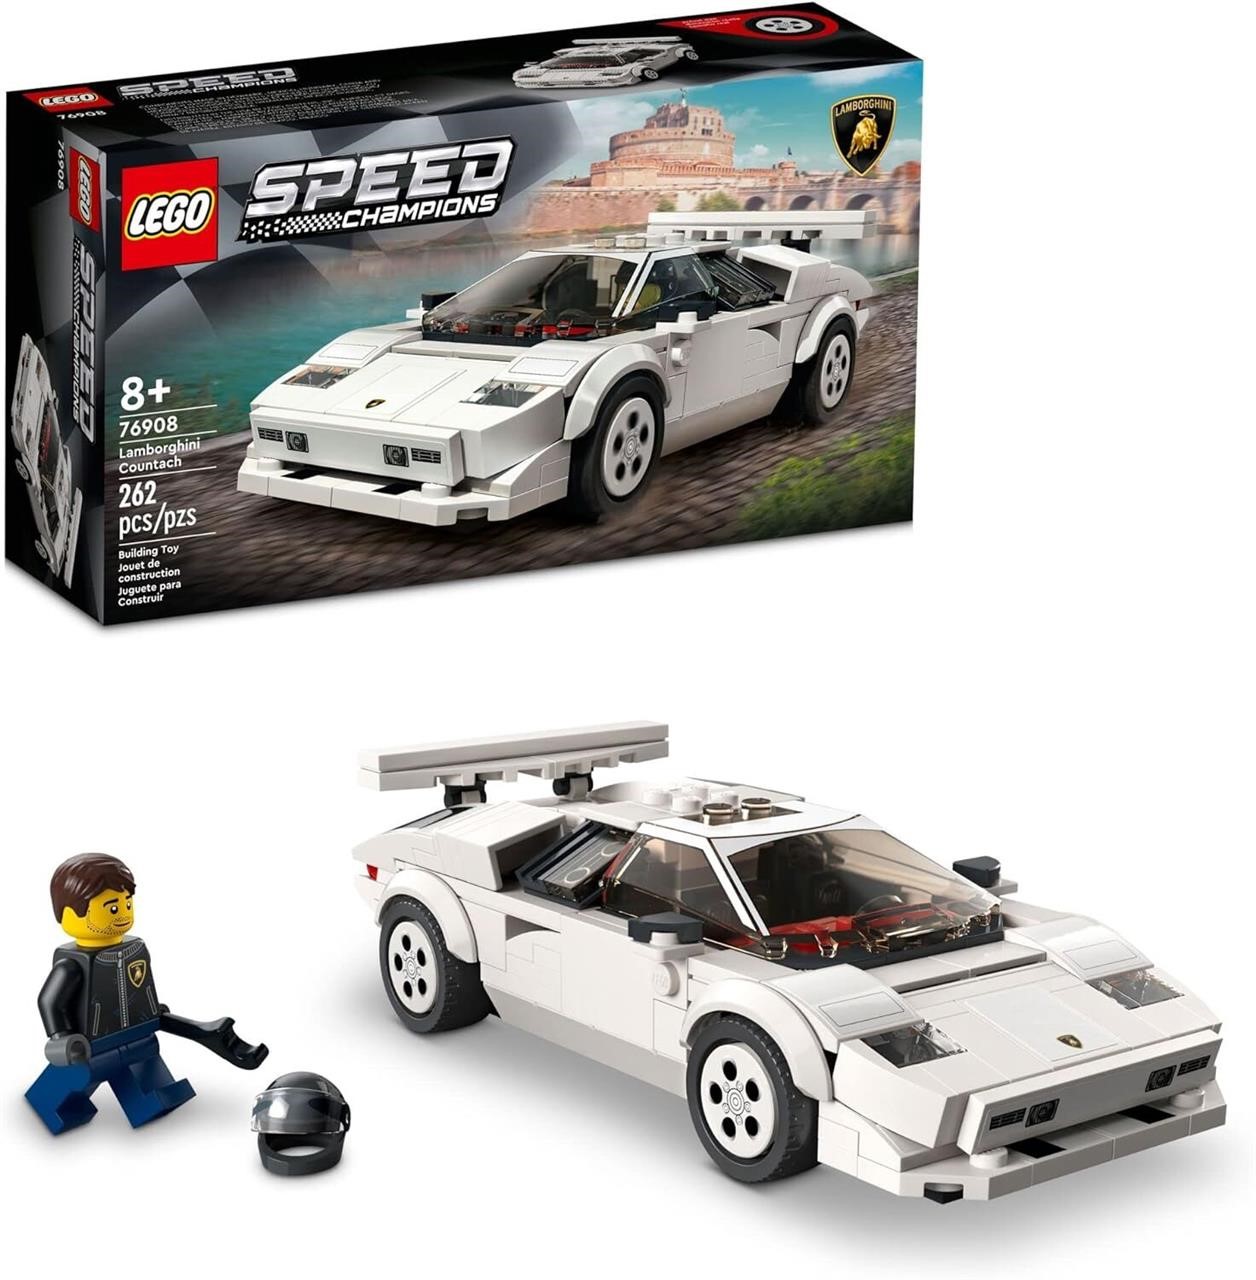 Lego Lamborghini Countach 76908  Race Car Toy